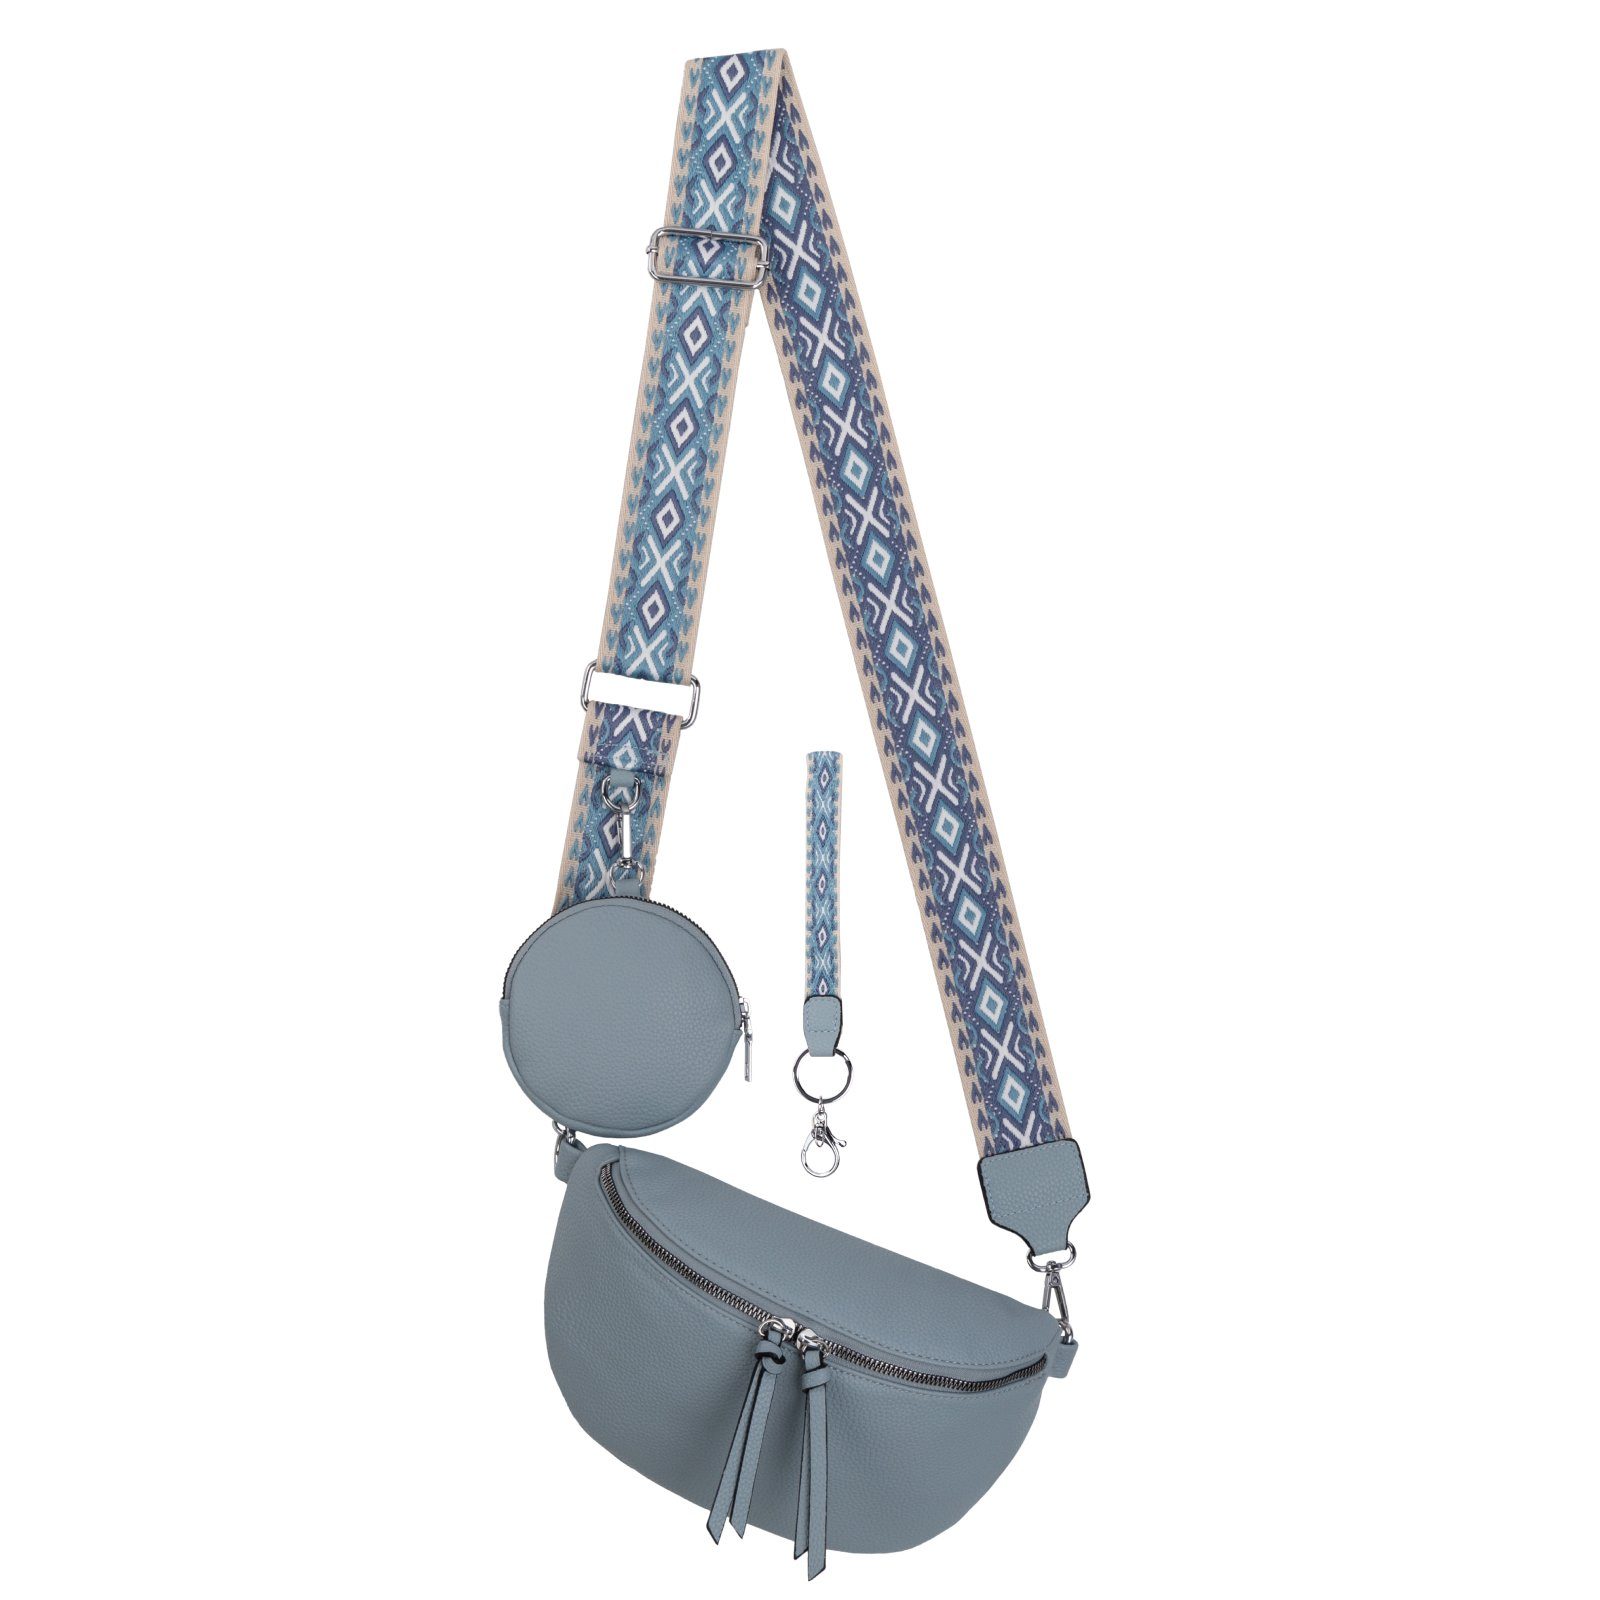 EAAKIE Gürteltasche Bauchtasche Umhängetasche Crossbody-Bag Hüfttasche Kunstleder Italy-D, als Schultertasche, CrossOver, Umhängetasche tragbar L.BLUE